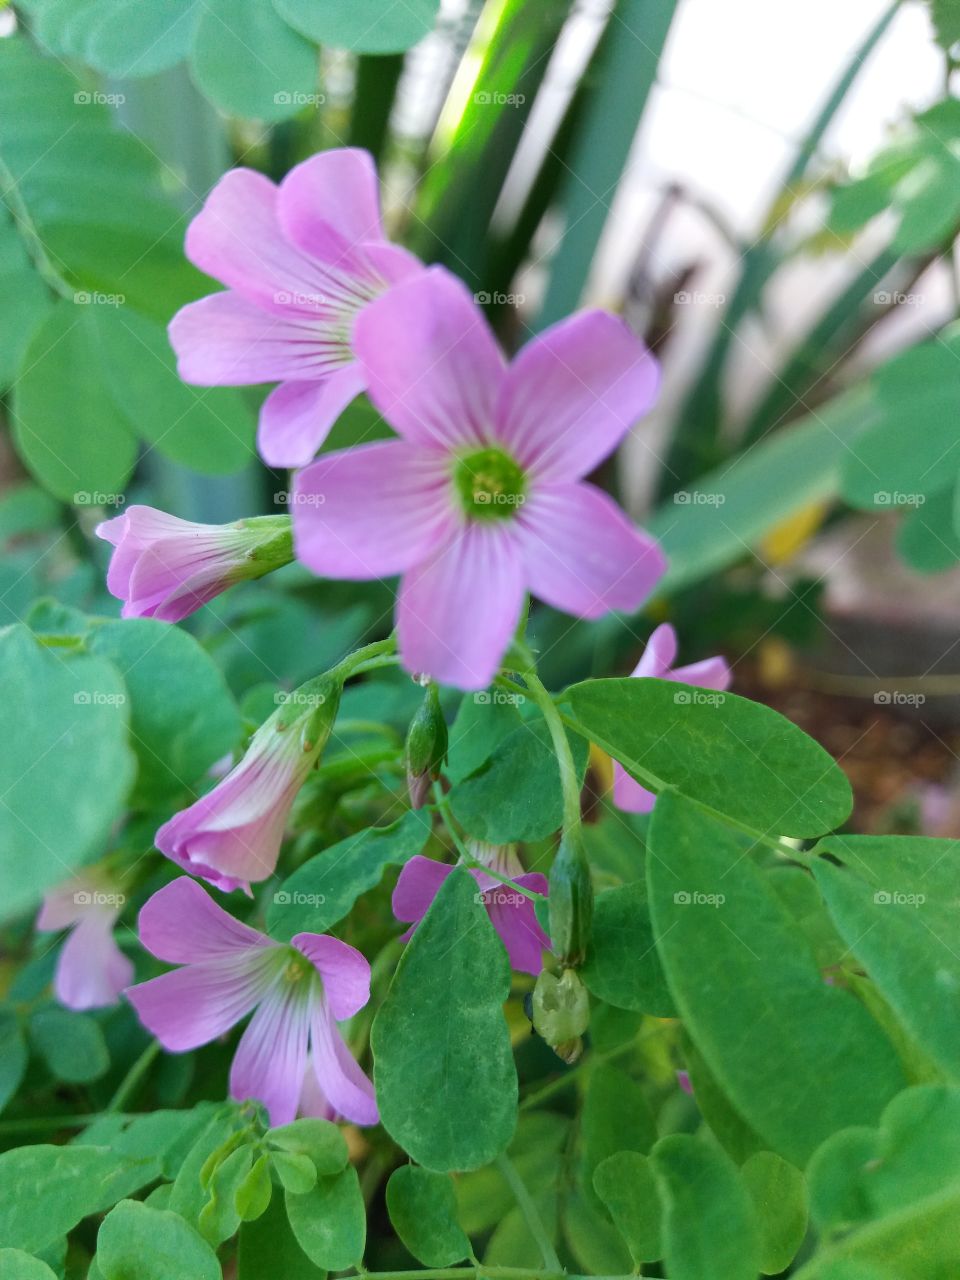 Sour clover flower